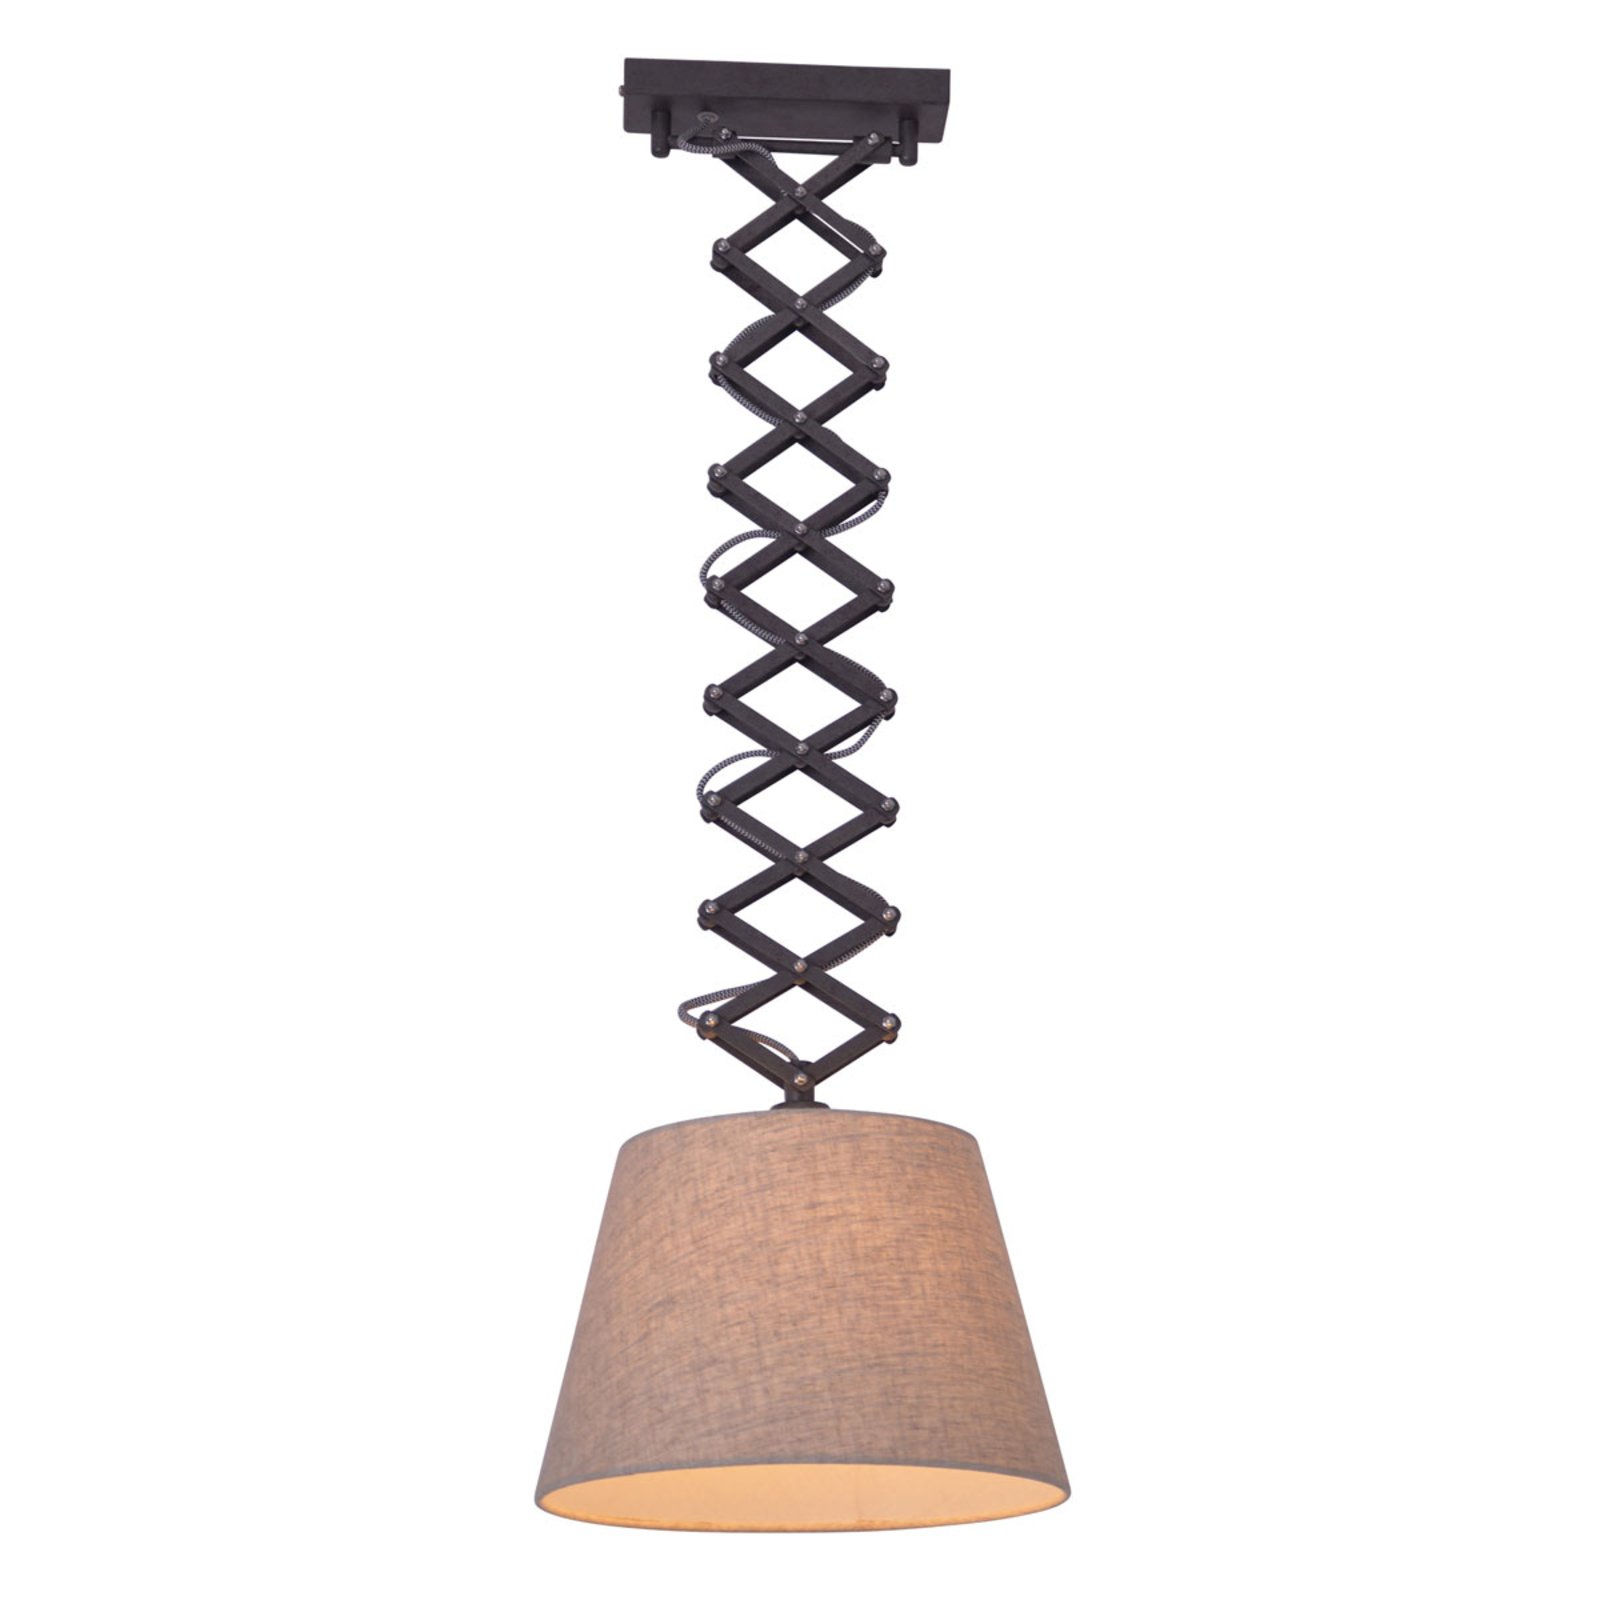 Tekstilna stropna svjetiljka Adrienne podesiva po visini